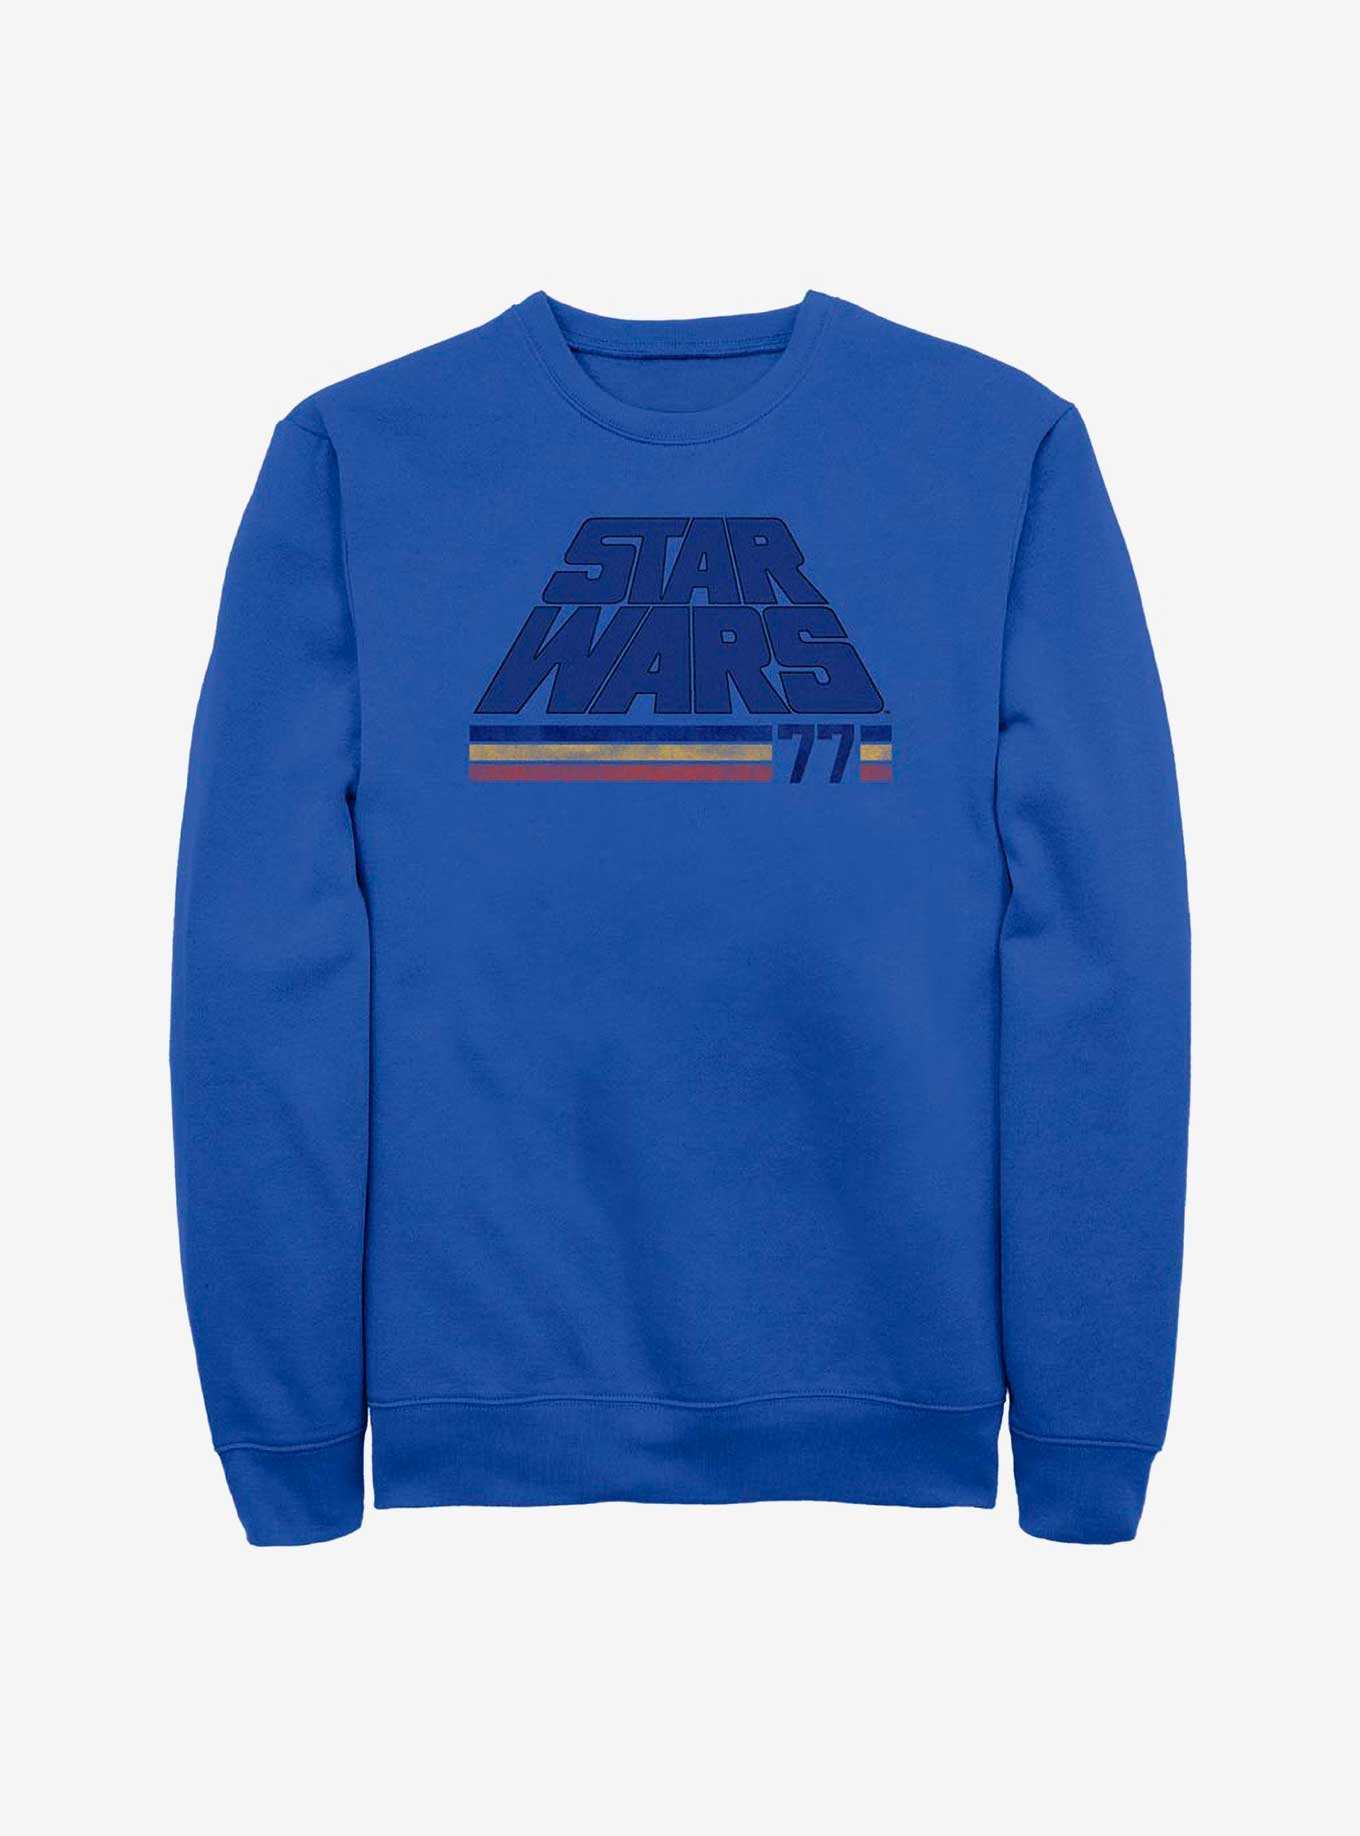 Star Wars Distressed Sweatshirt, , hi-res